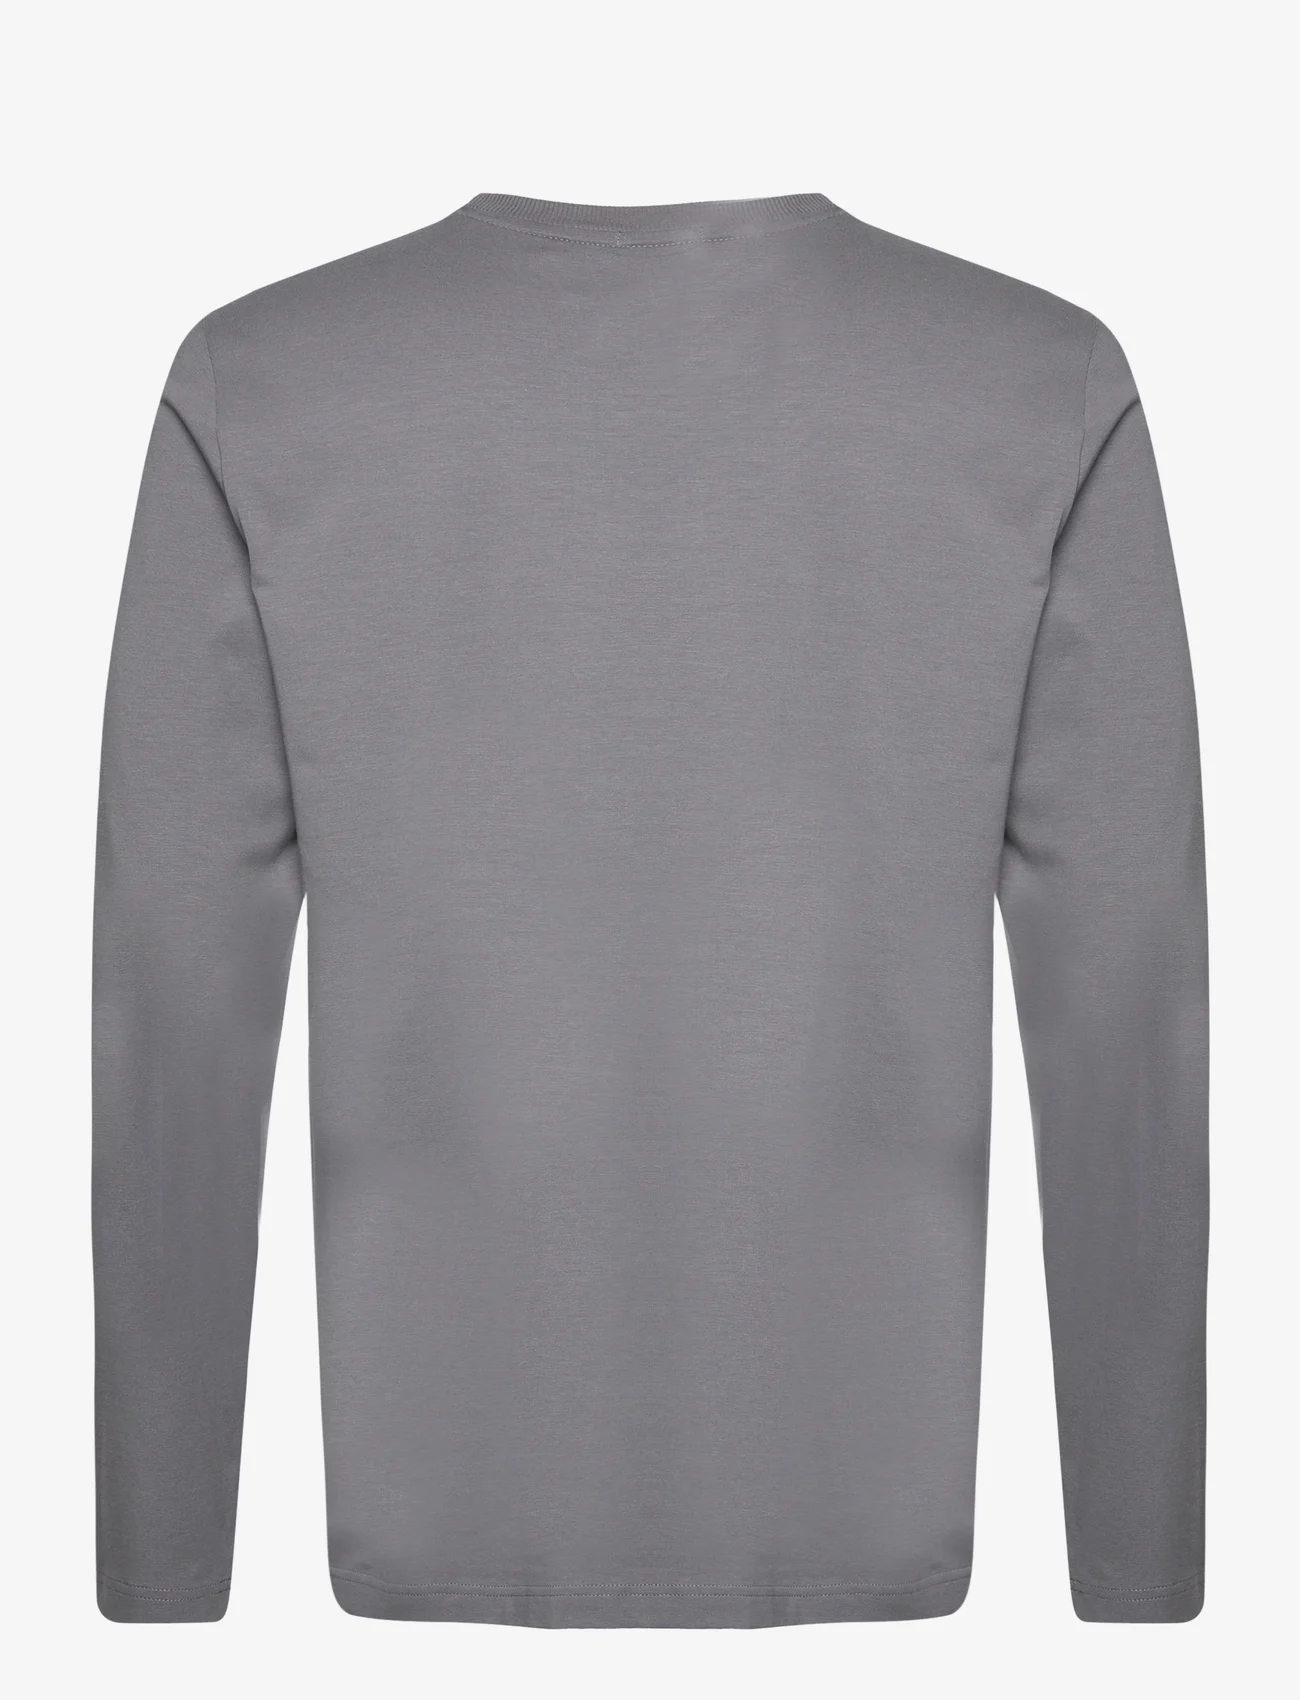 BOSS - Tee Long - langarmshirts - medium grey - 1